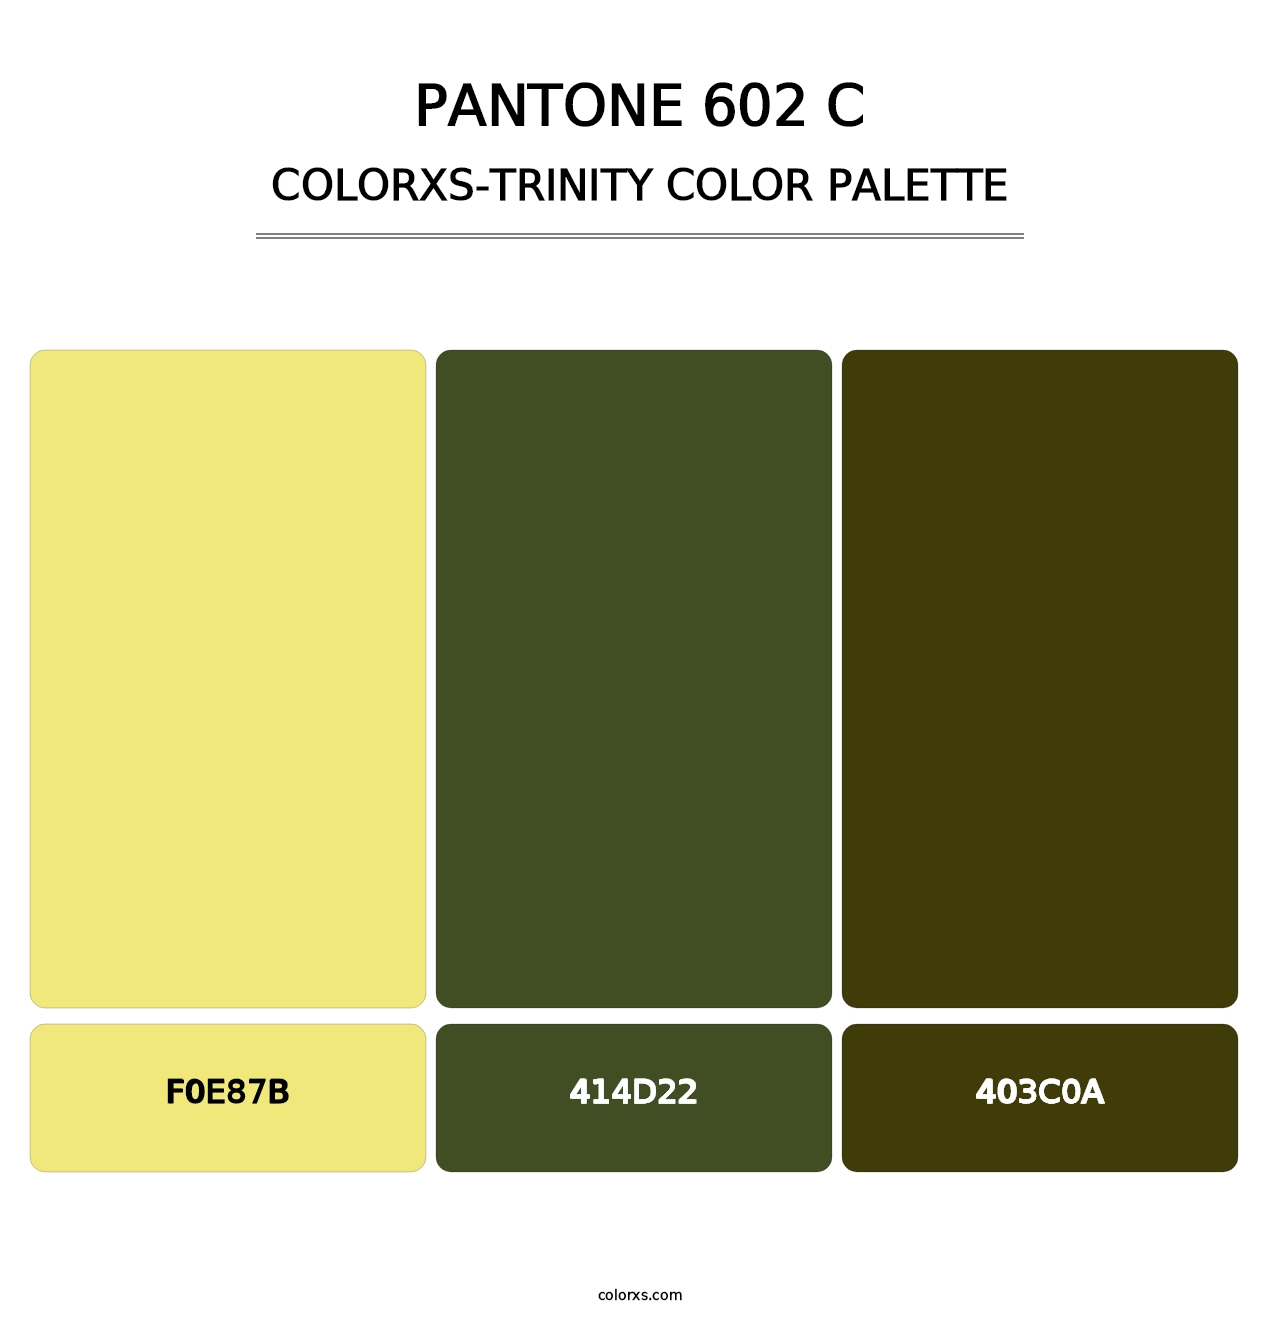 PANTONE 602 C - Colorxs Trinity Palette